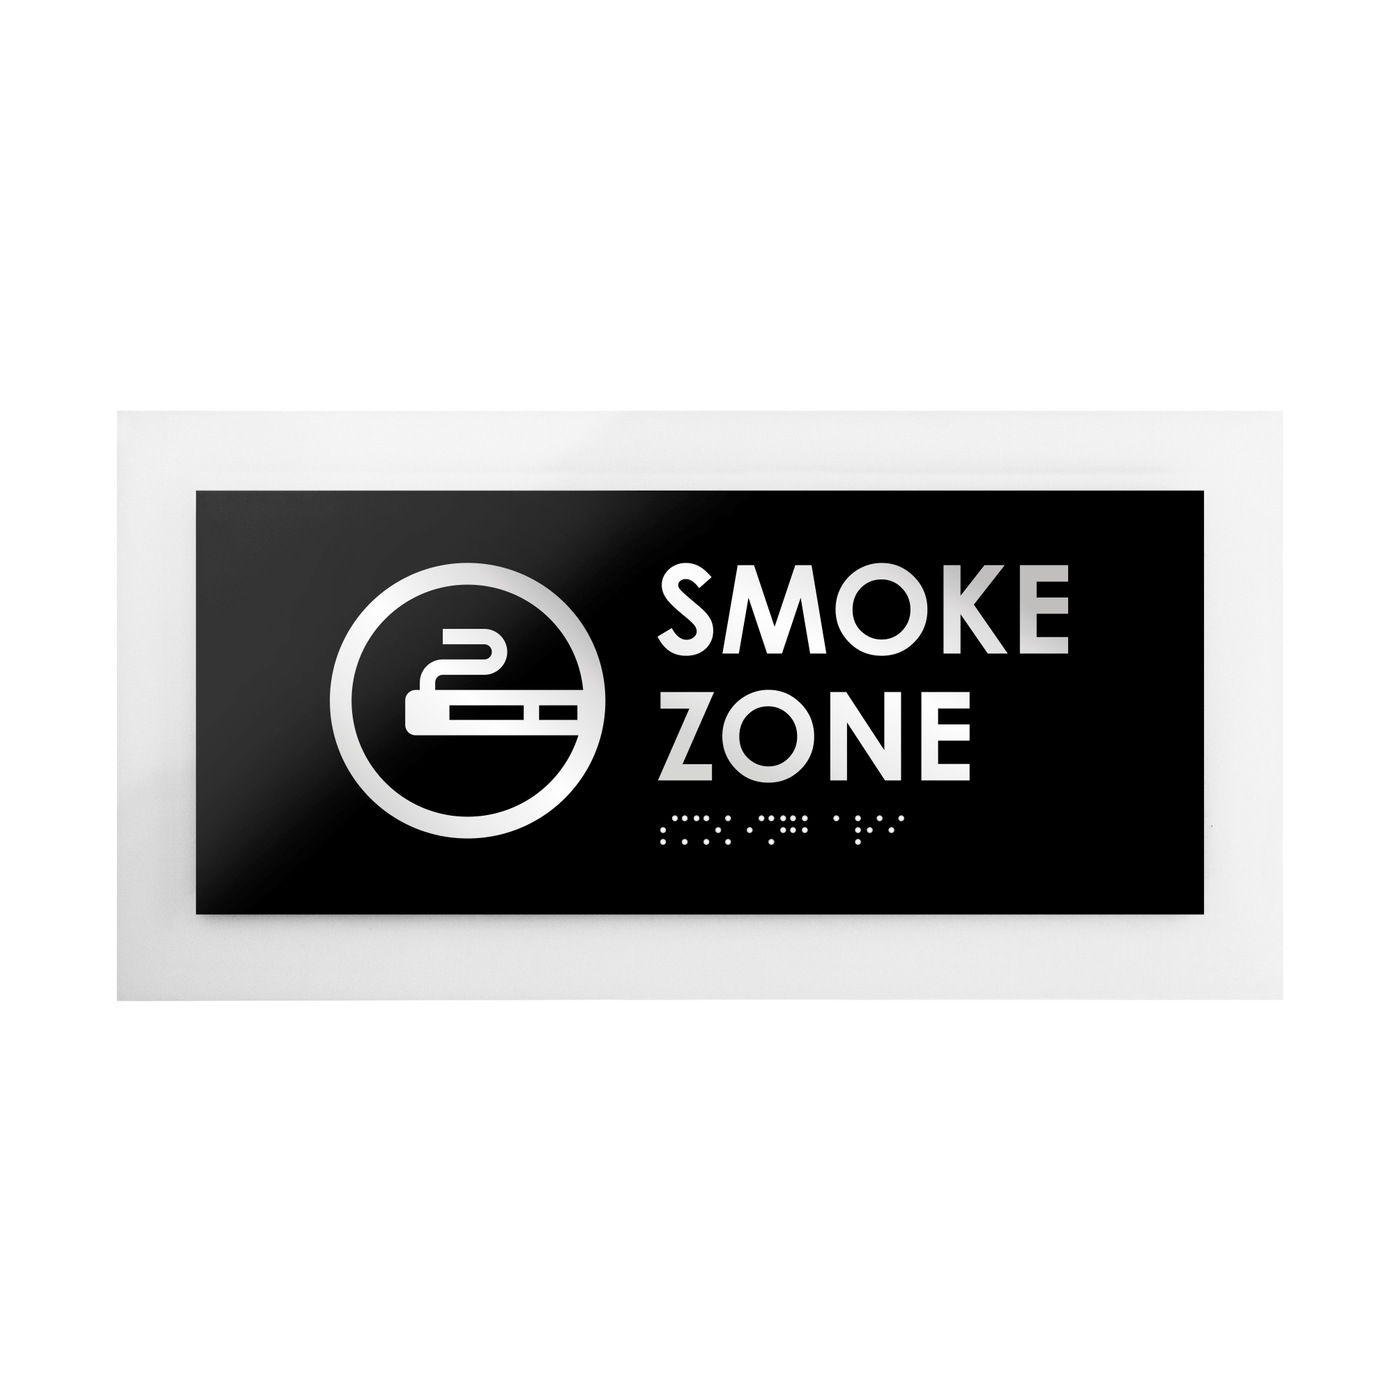 Acrylic Smoke Zone Sign "Simple" Design